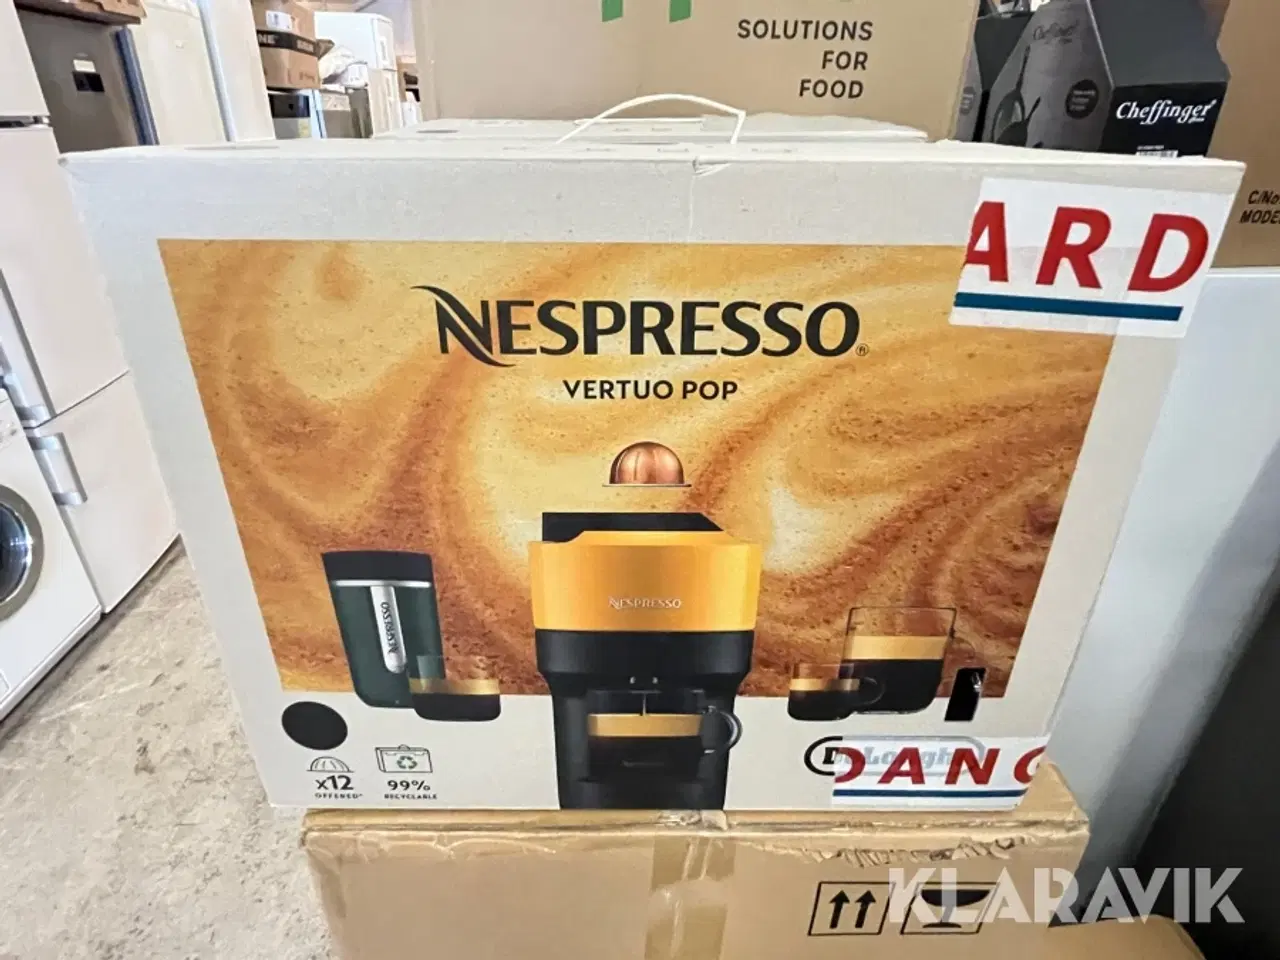 Billede 1 - Nespresso maskine Nespresso DeLonghi vertuo pop